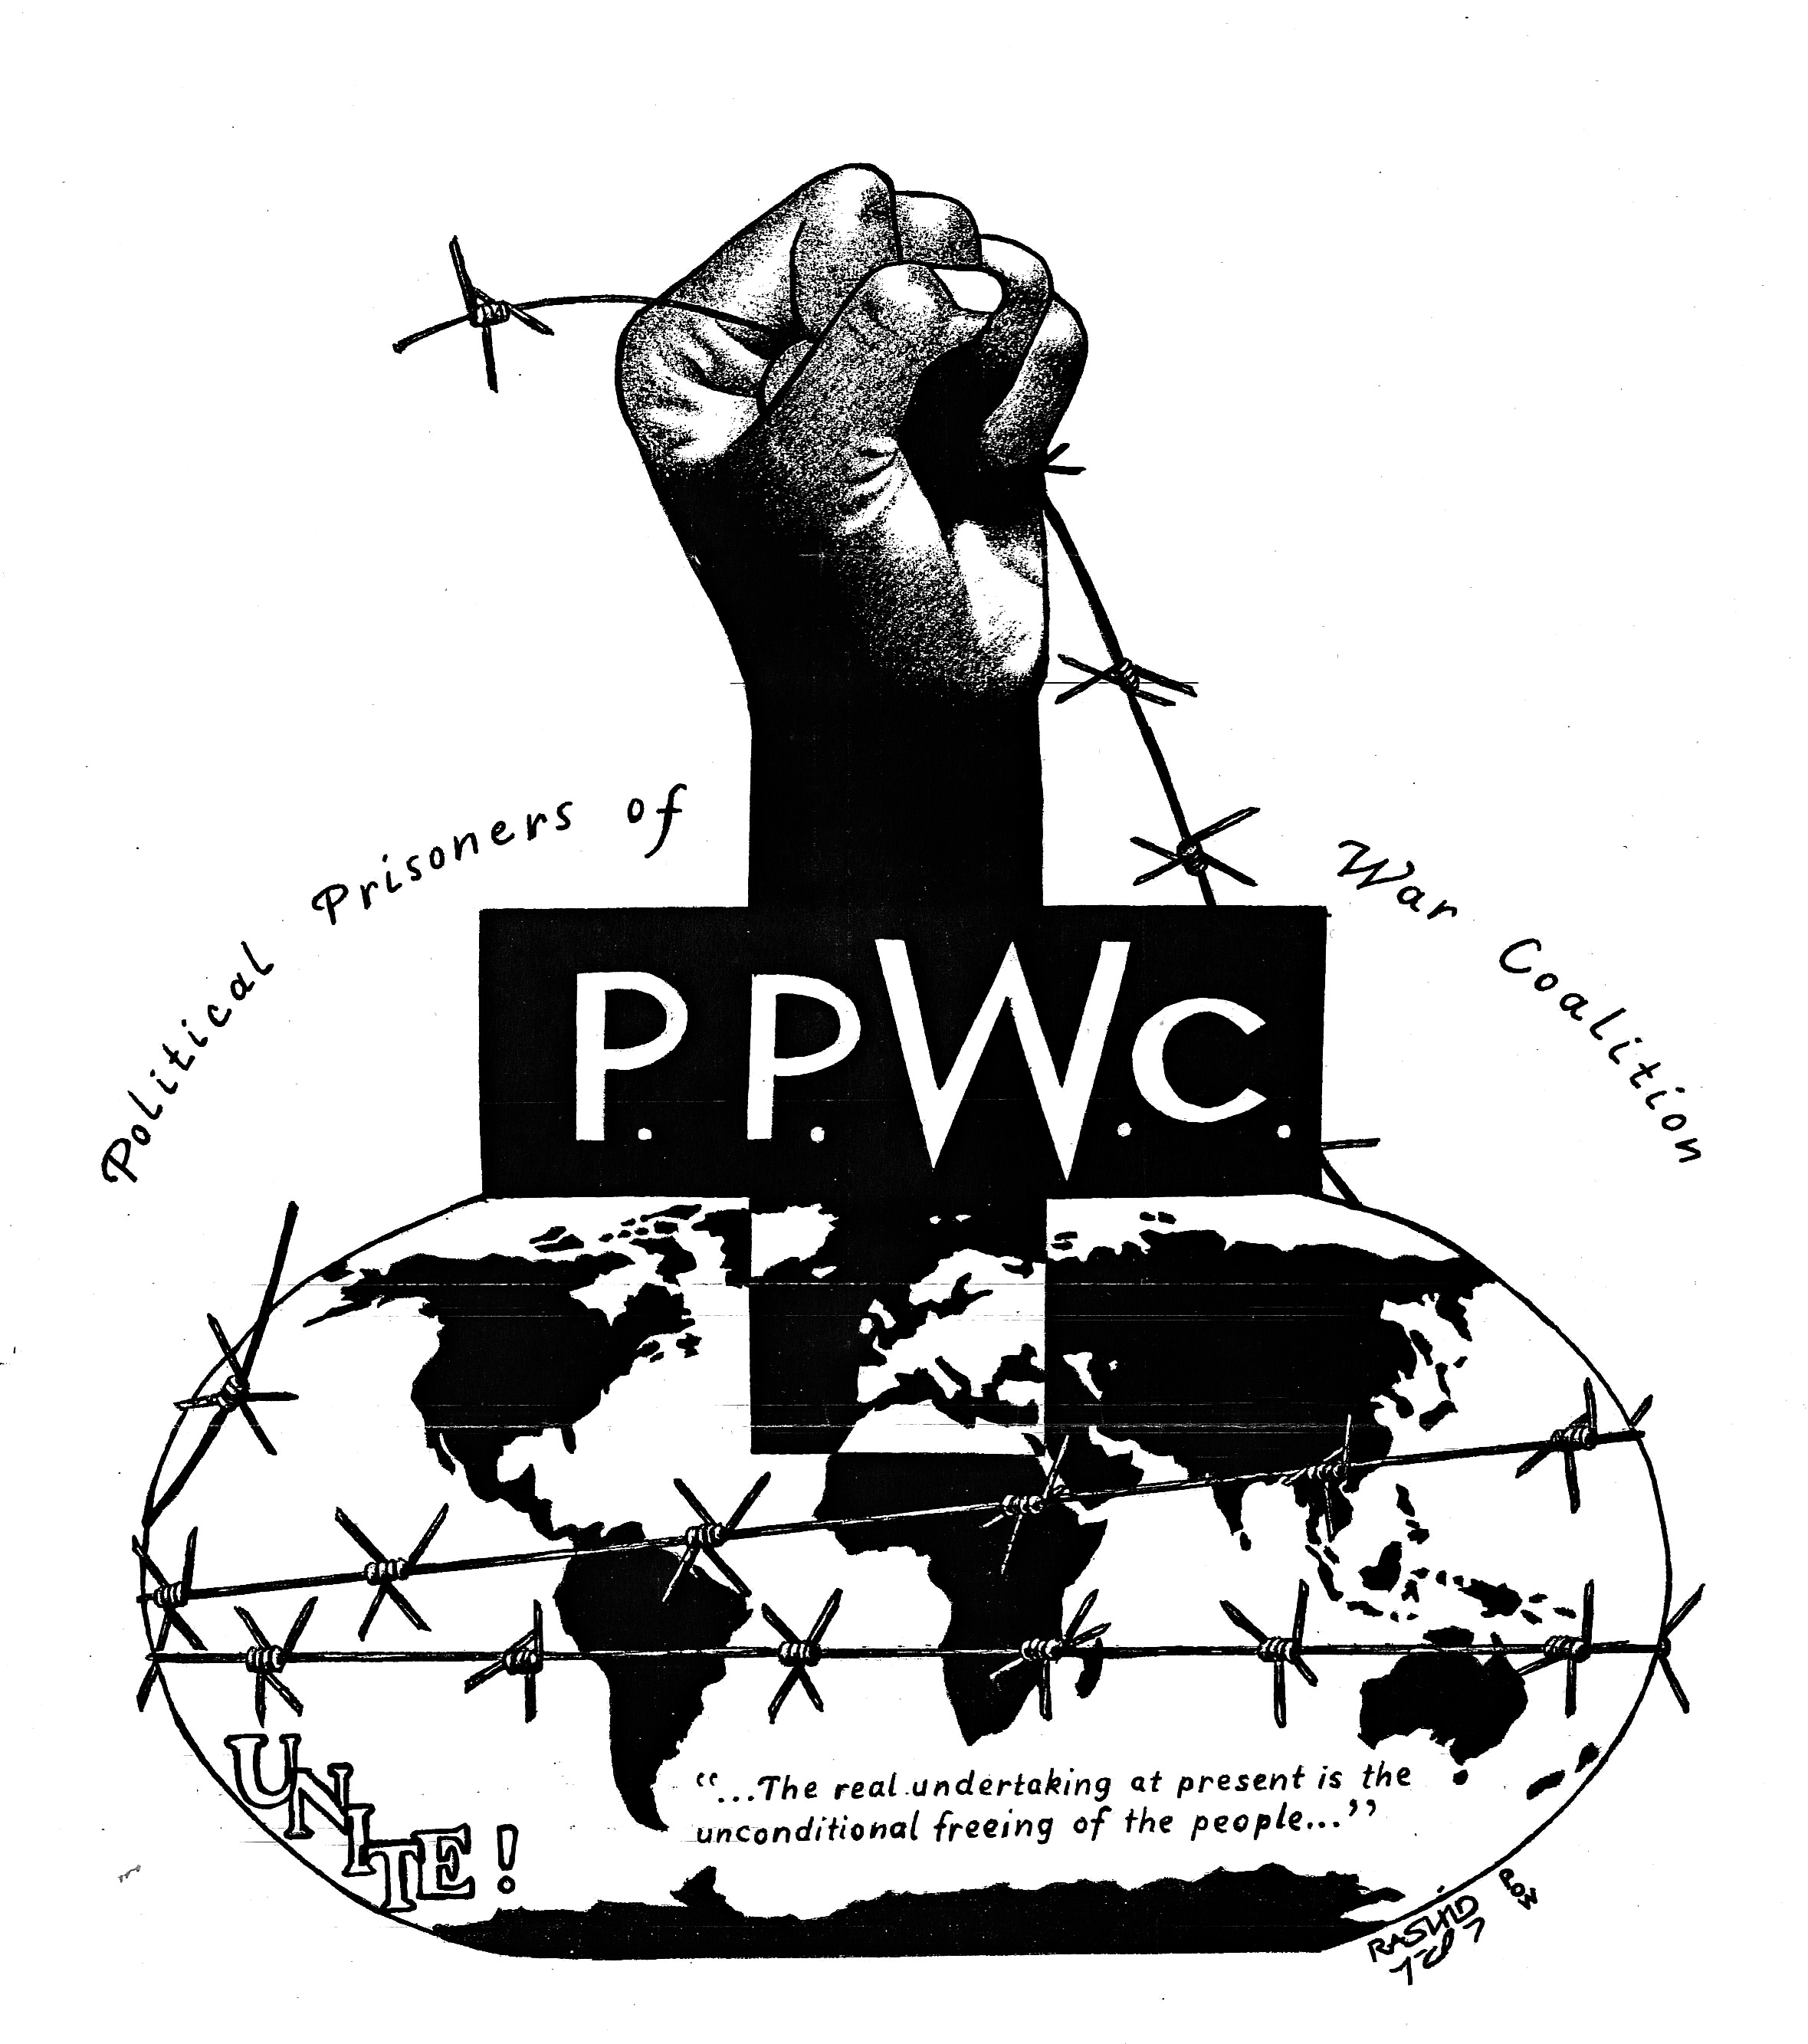 PPWC